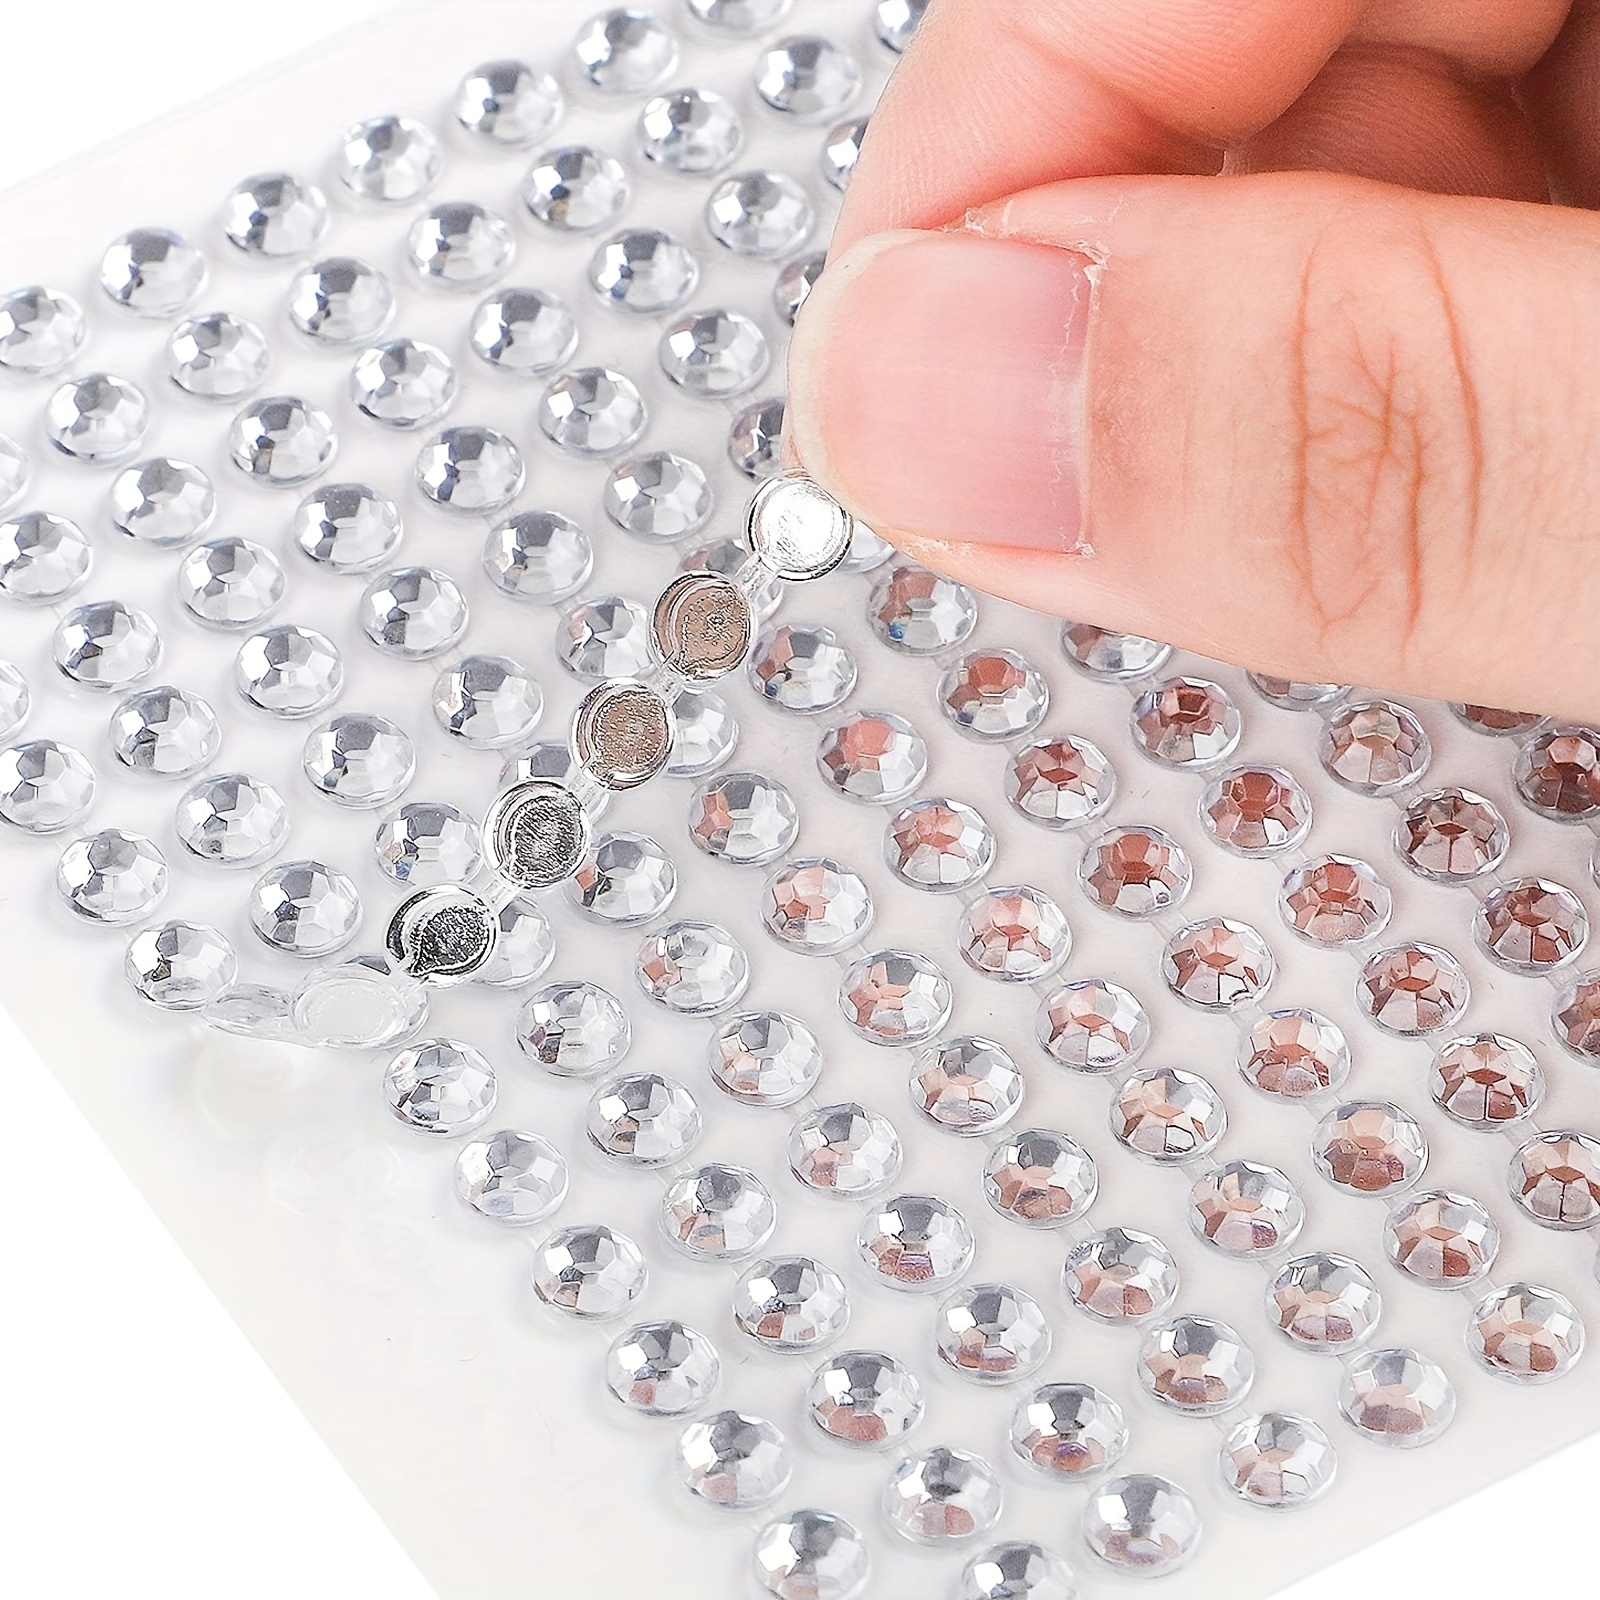 70 x 10mm Rhinestone Diamante Stick On Self Adhesive Gems Craft  Embellishments